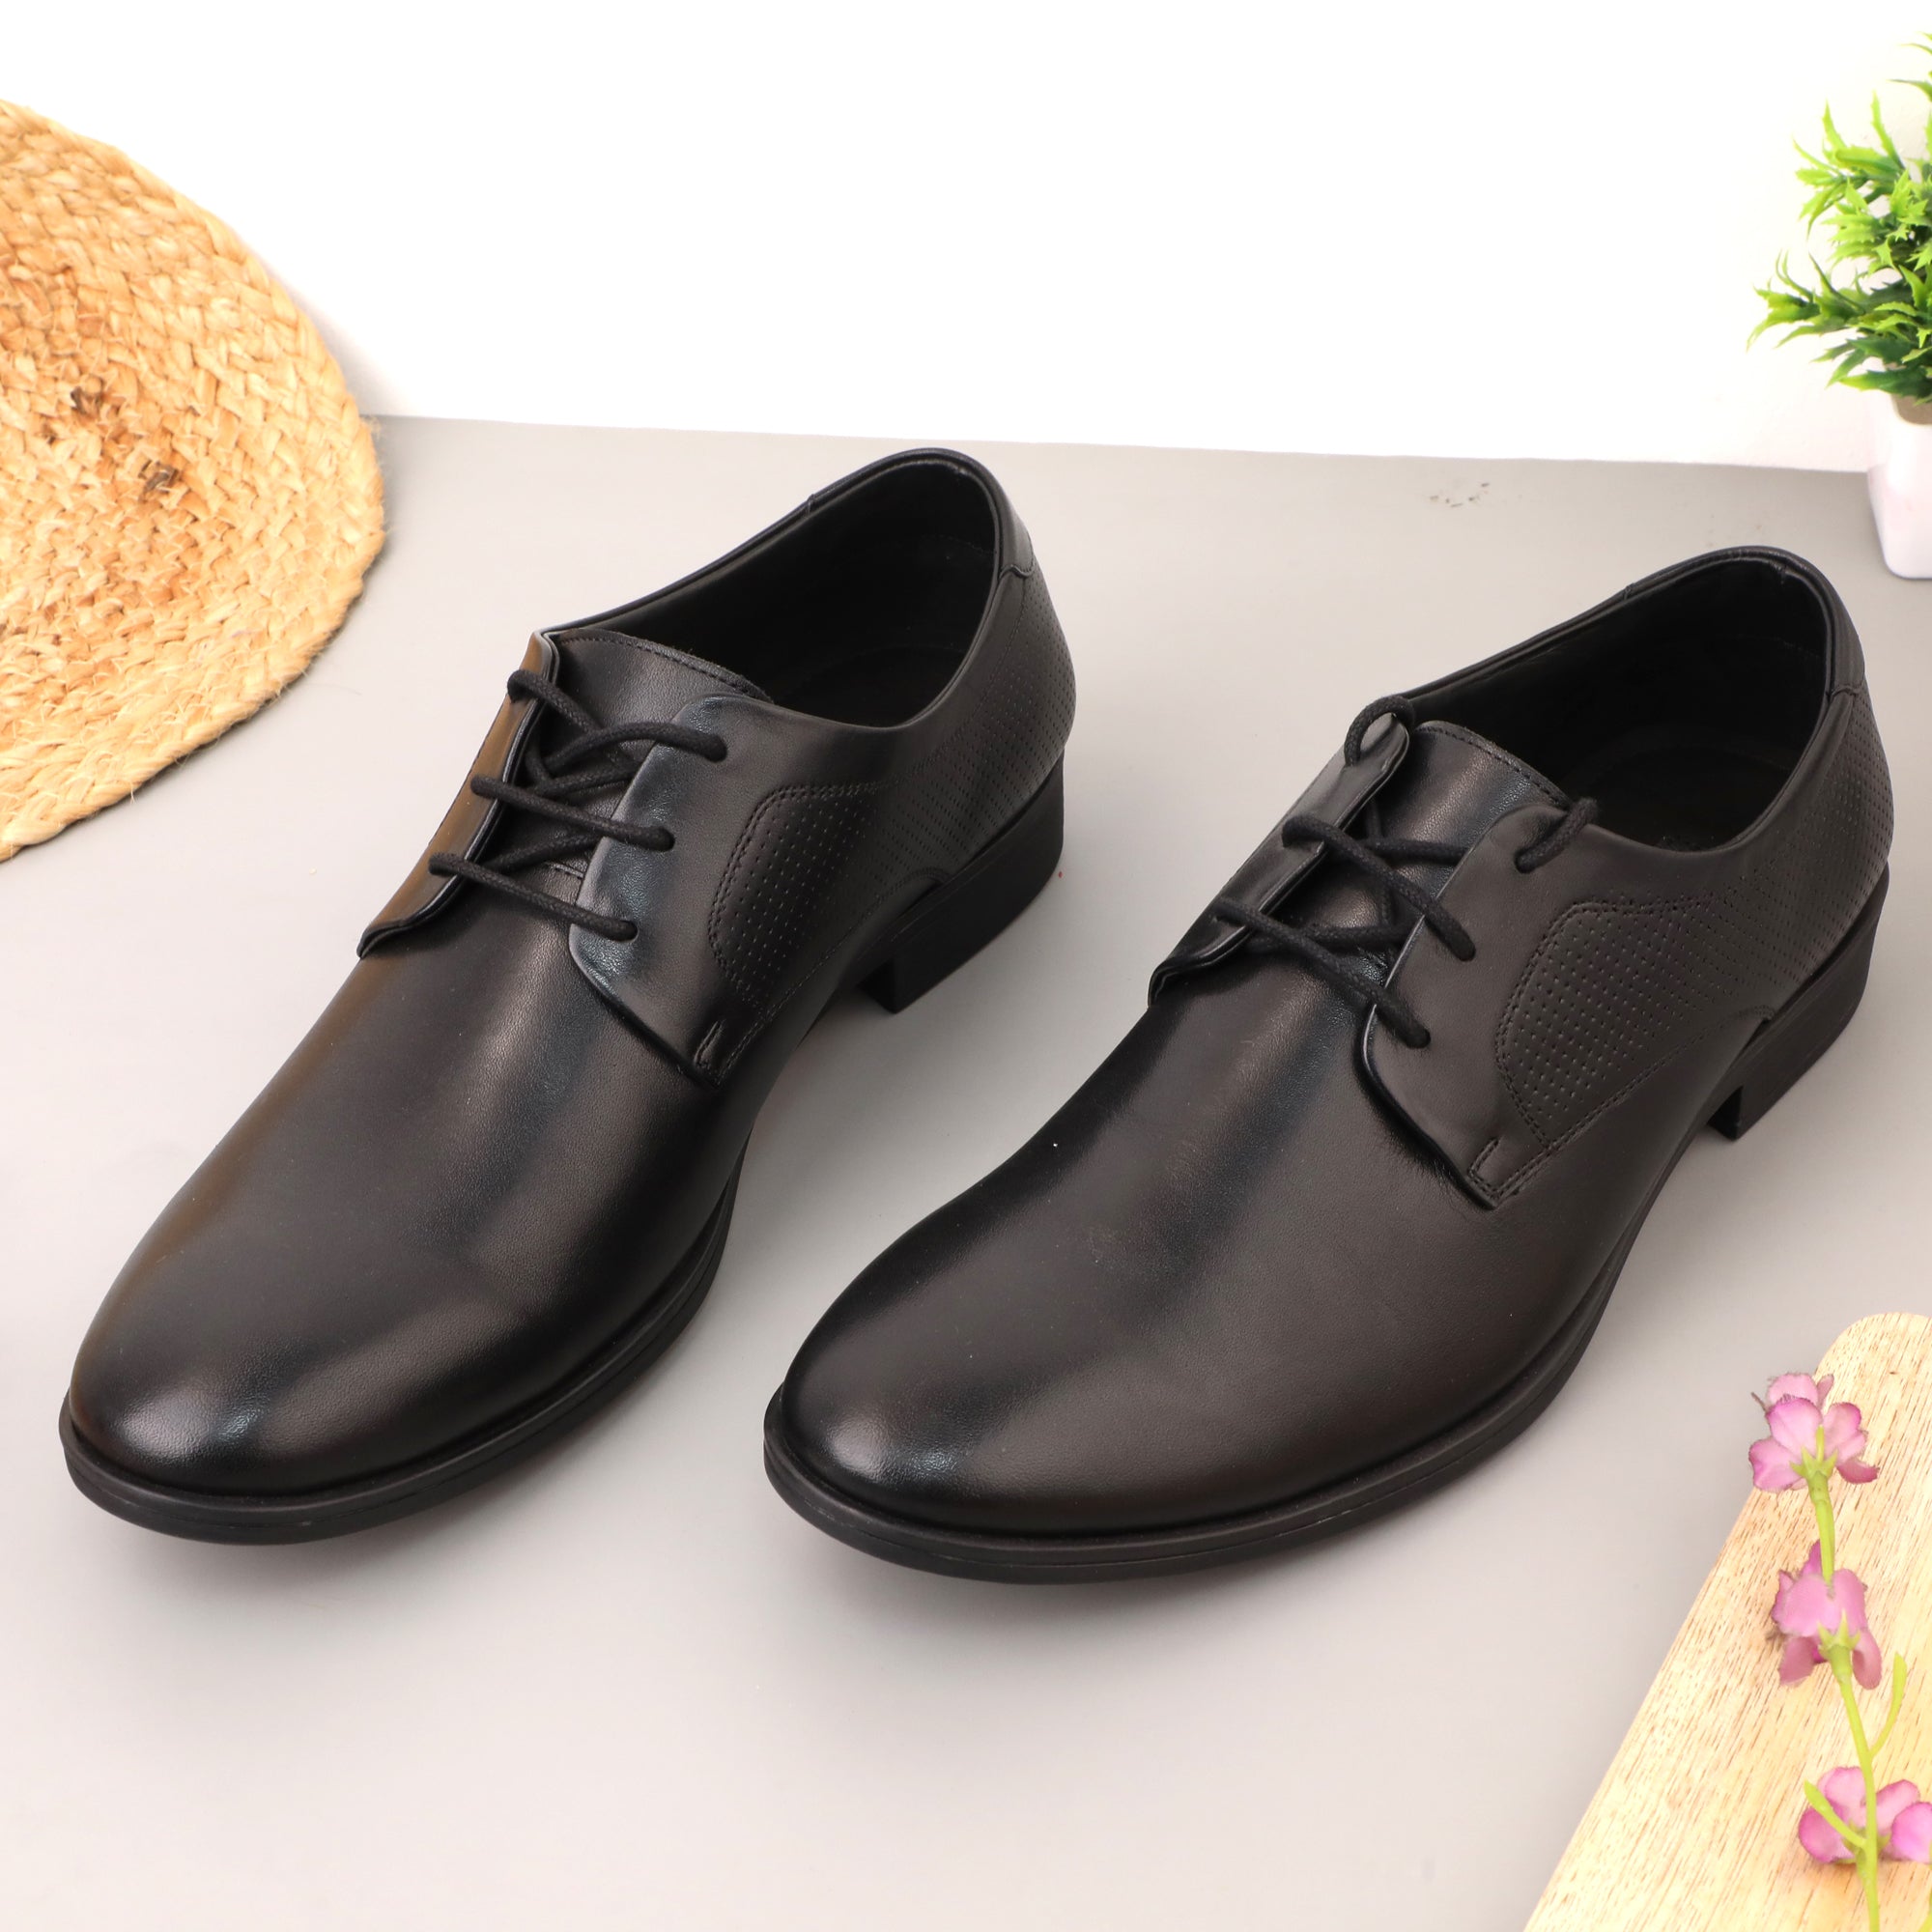 Ezok Black Leather Formal Shoes For Men